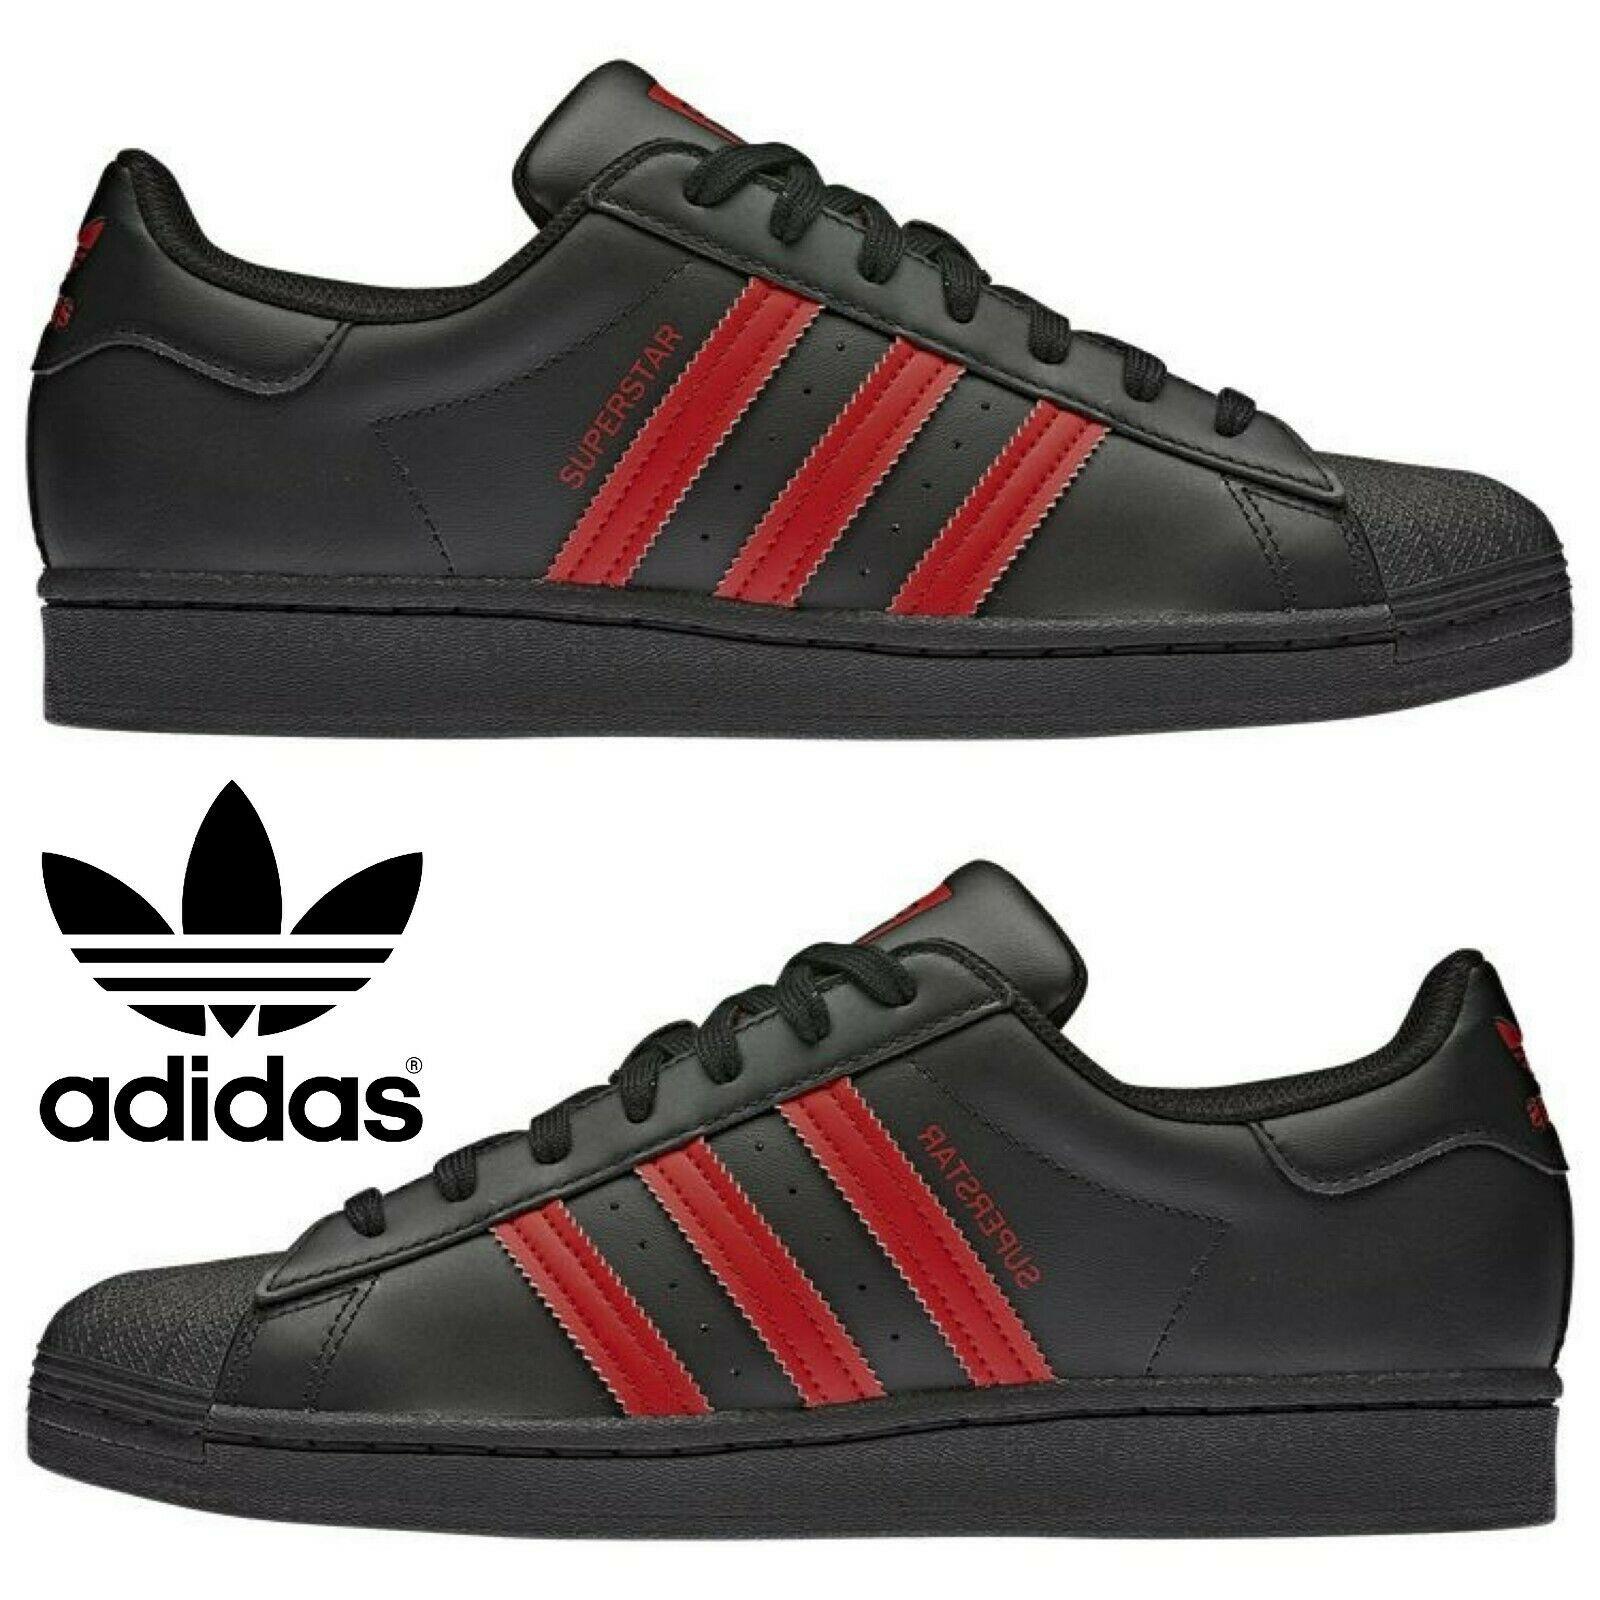 Adidas Originals Superstar Men`s Sneakers Comfort Sport Casual Shoes Black Red - Black , Black/Red Manufacturer